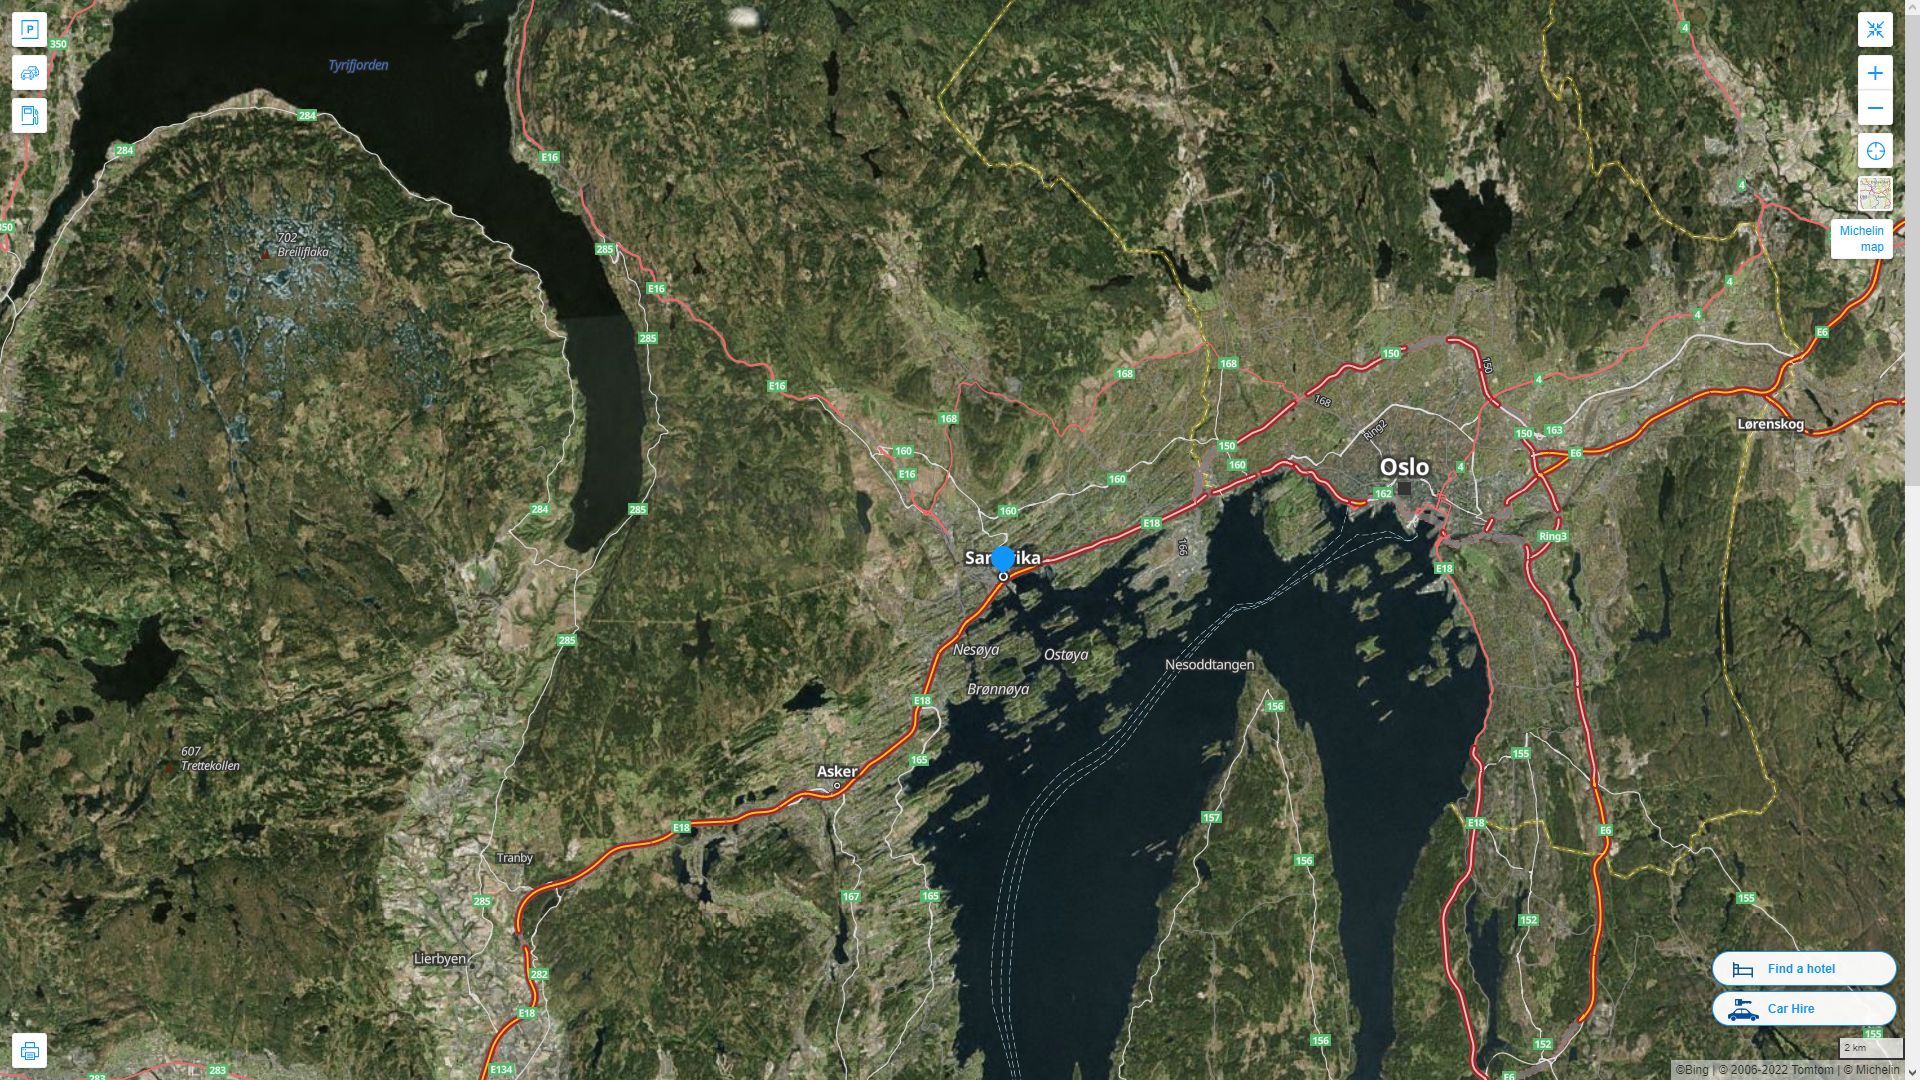 Baerum Norvege Autoroute et carte routiere avec vue satellite